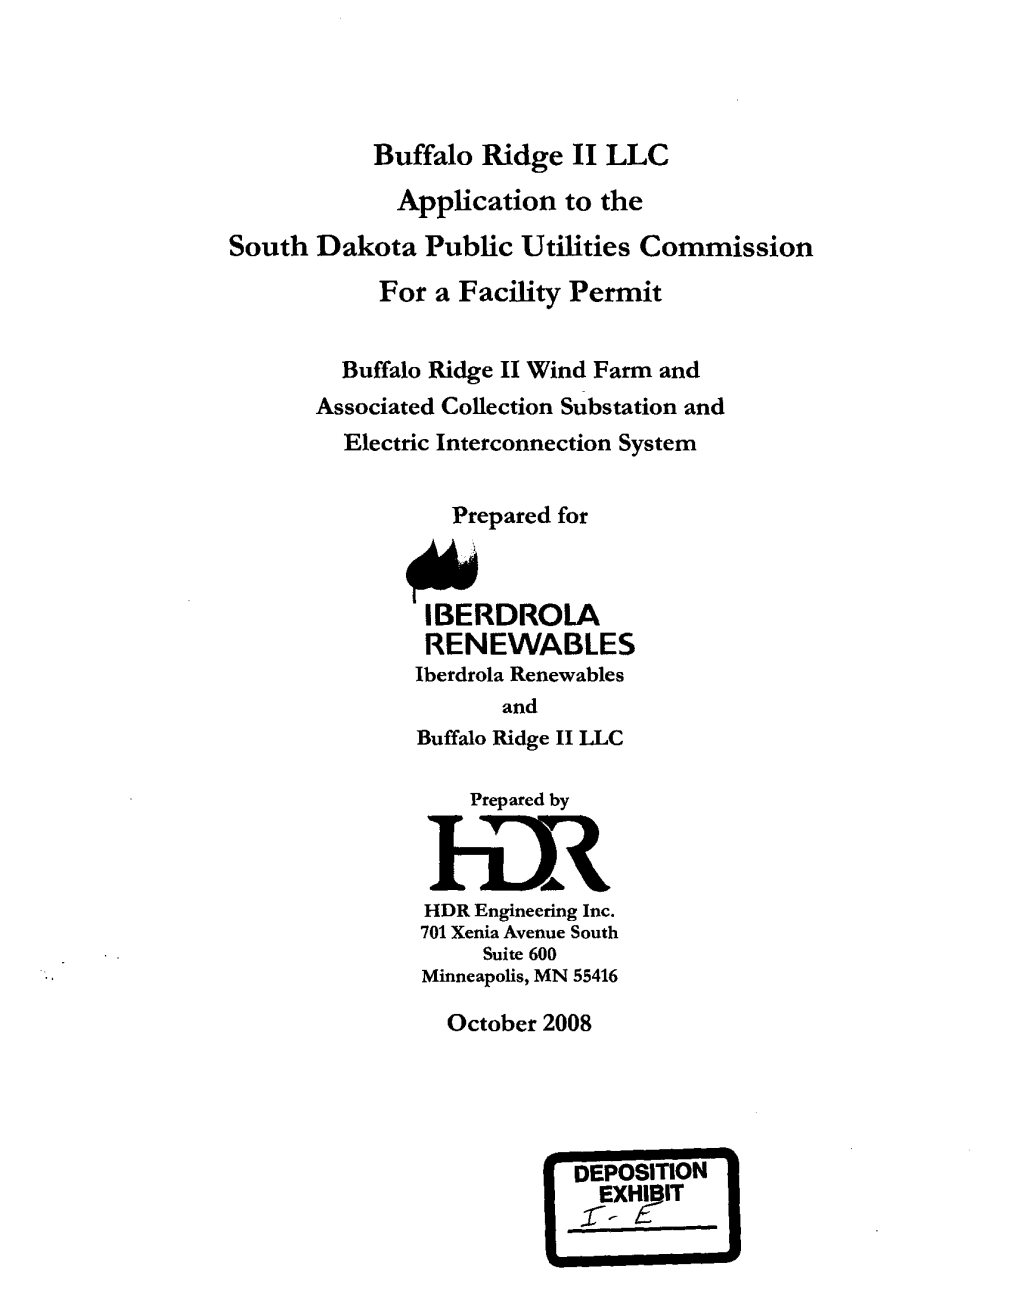 Buffalo Ridge II LLC Application to the South Dakota Public Utilities Commission for a Facility Permit